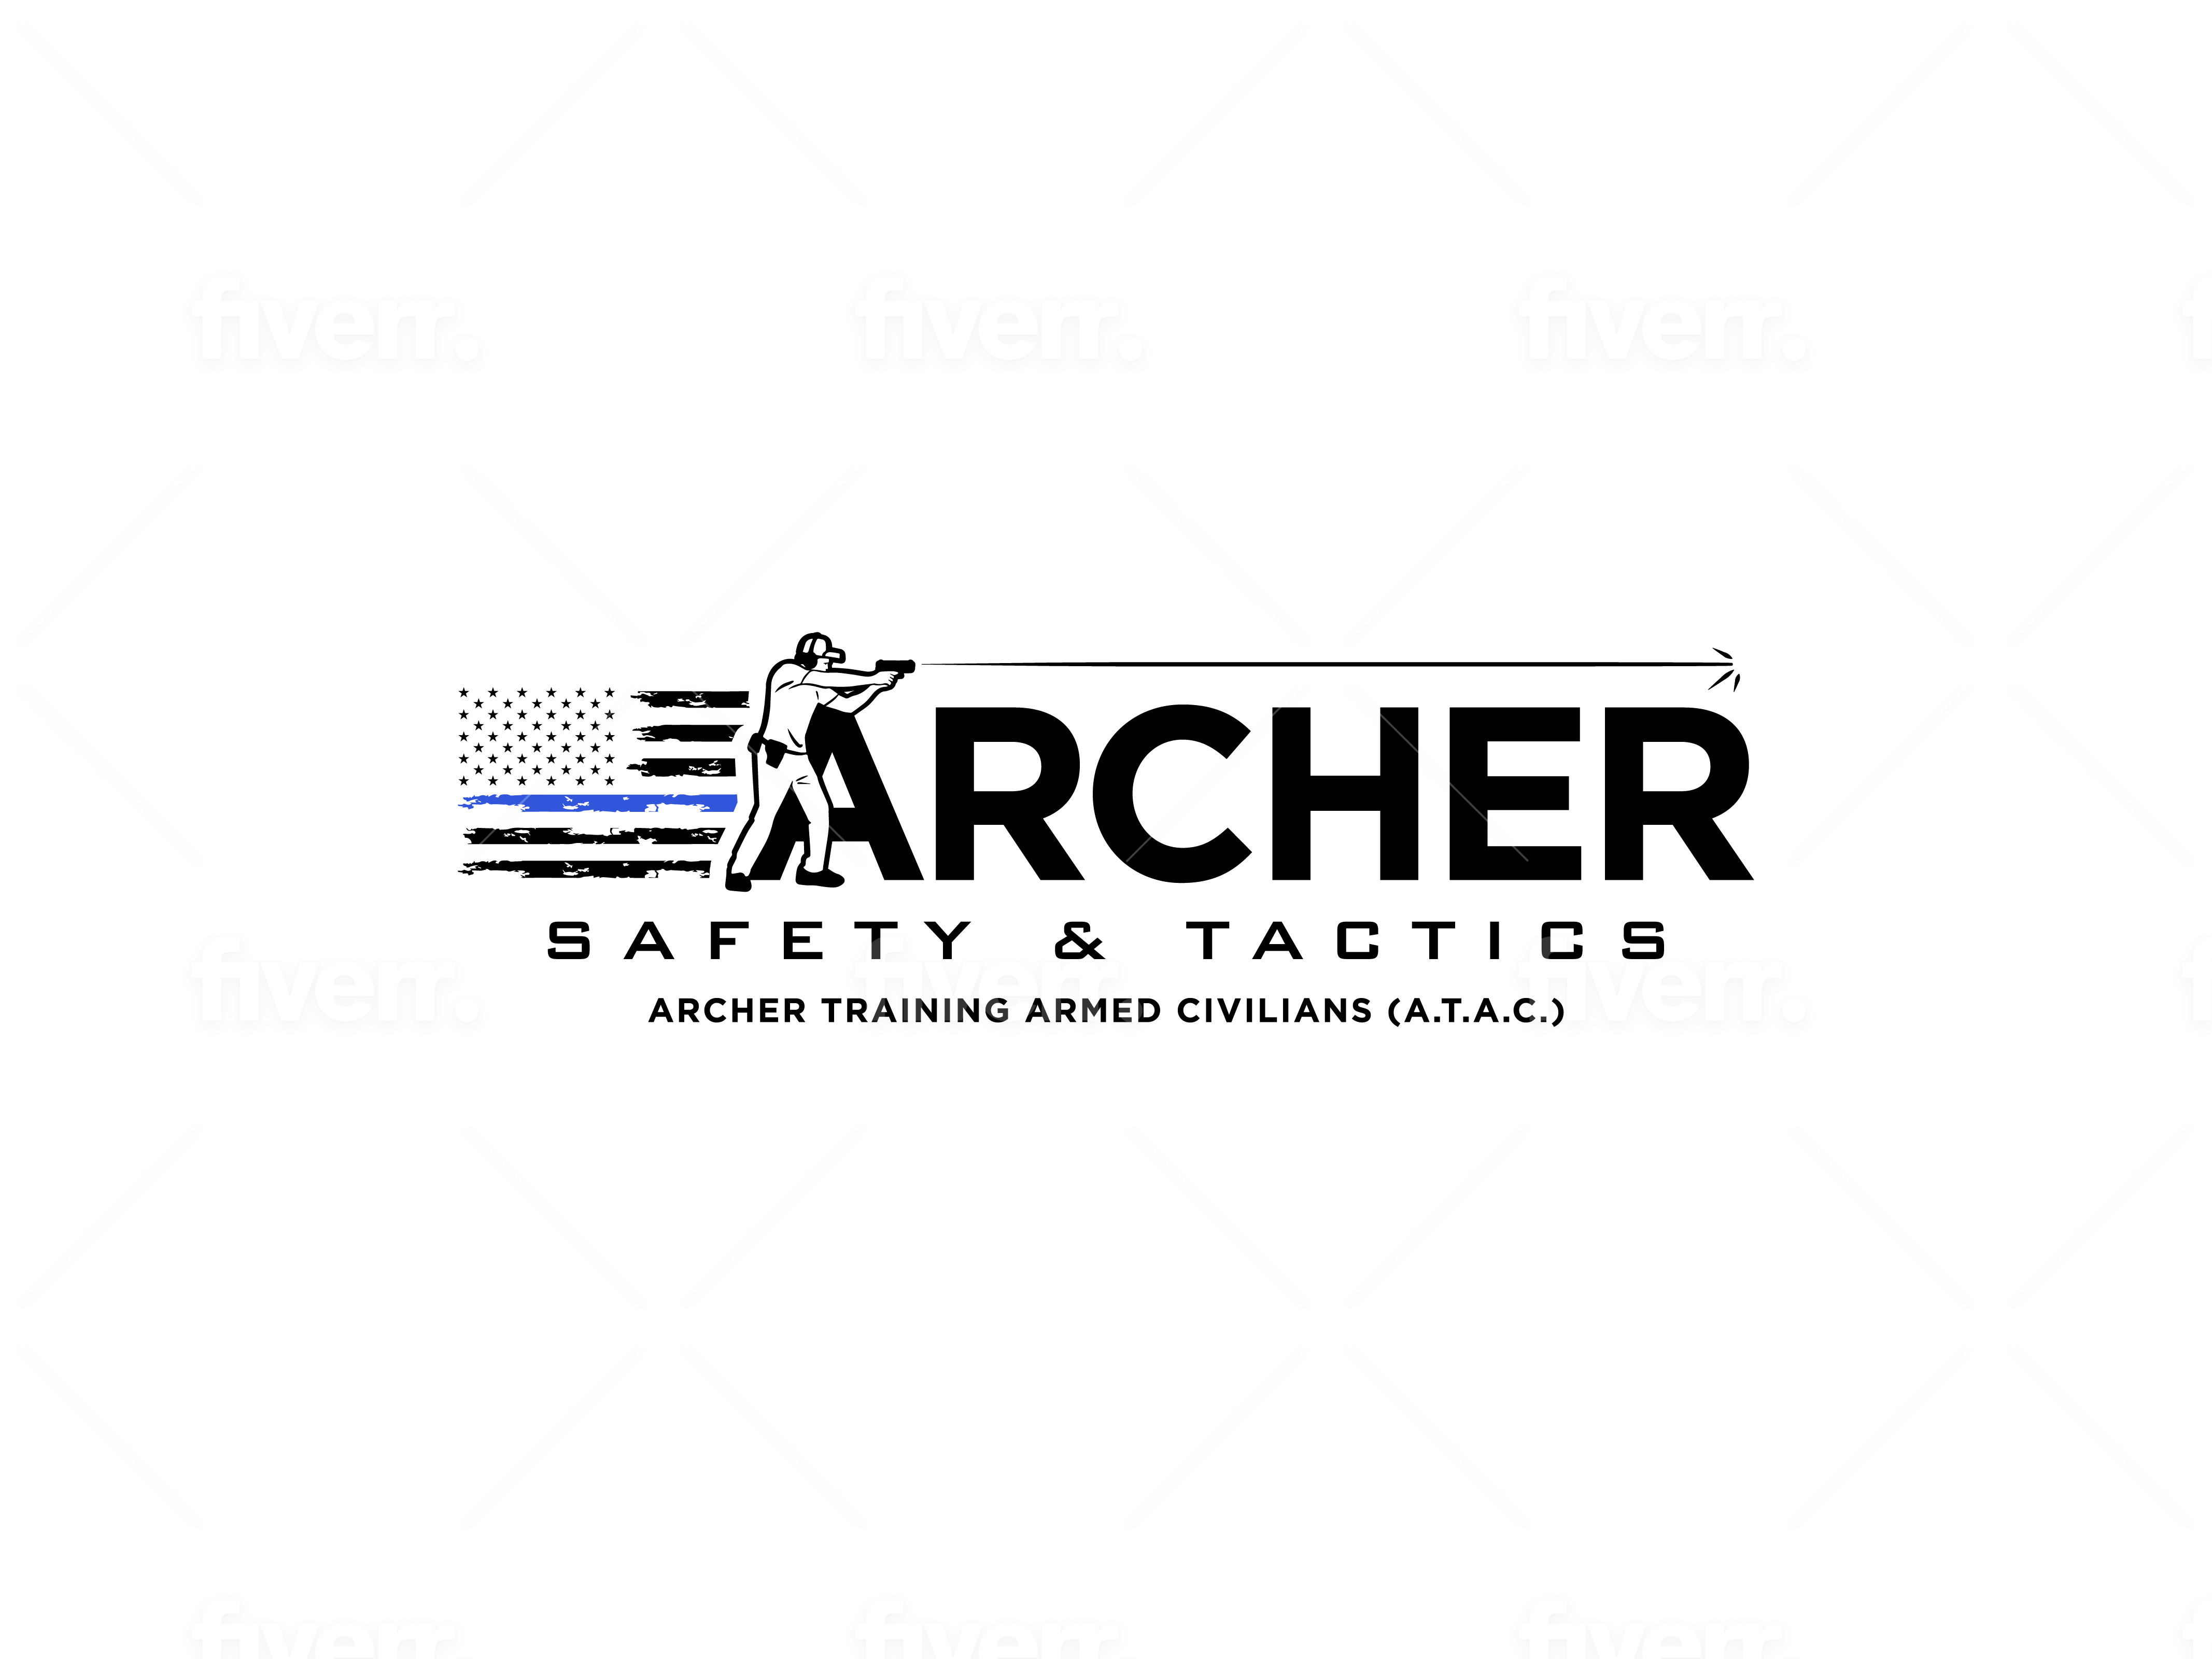 Archer Safety & Tactics